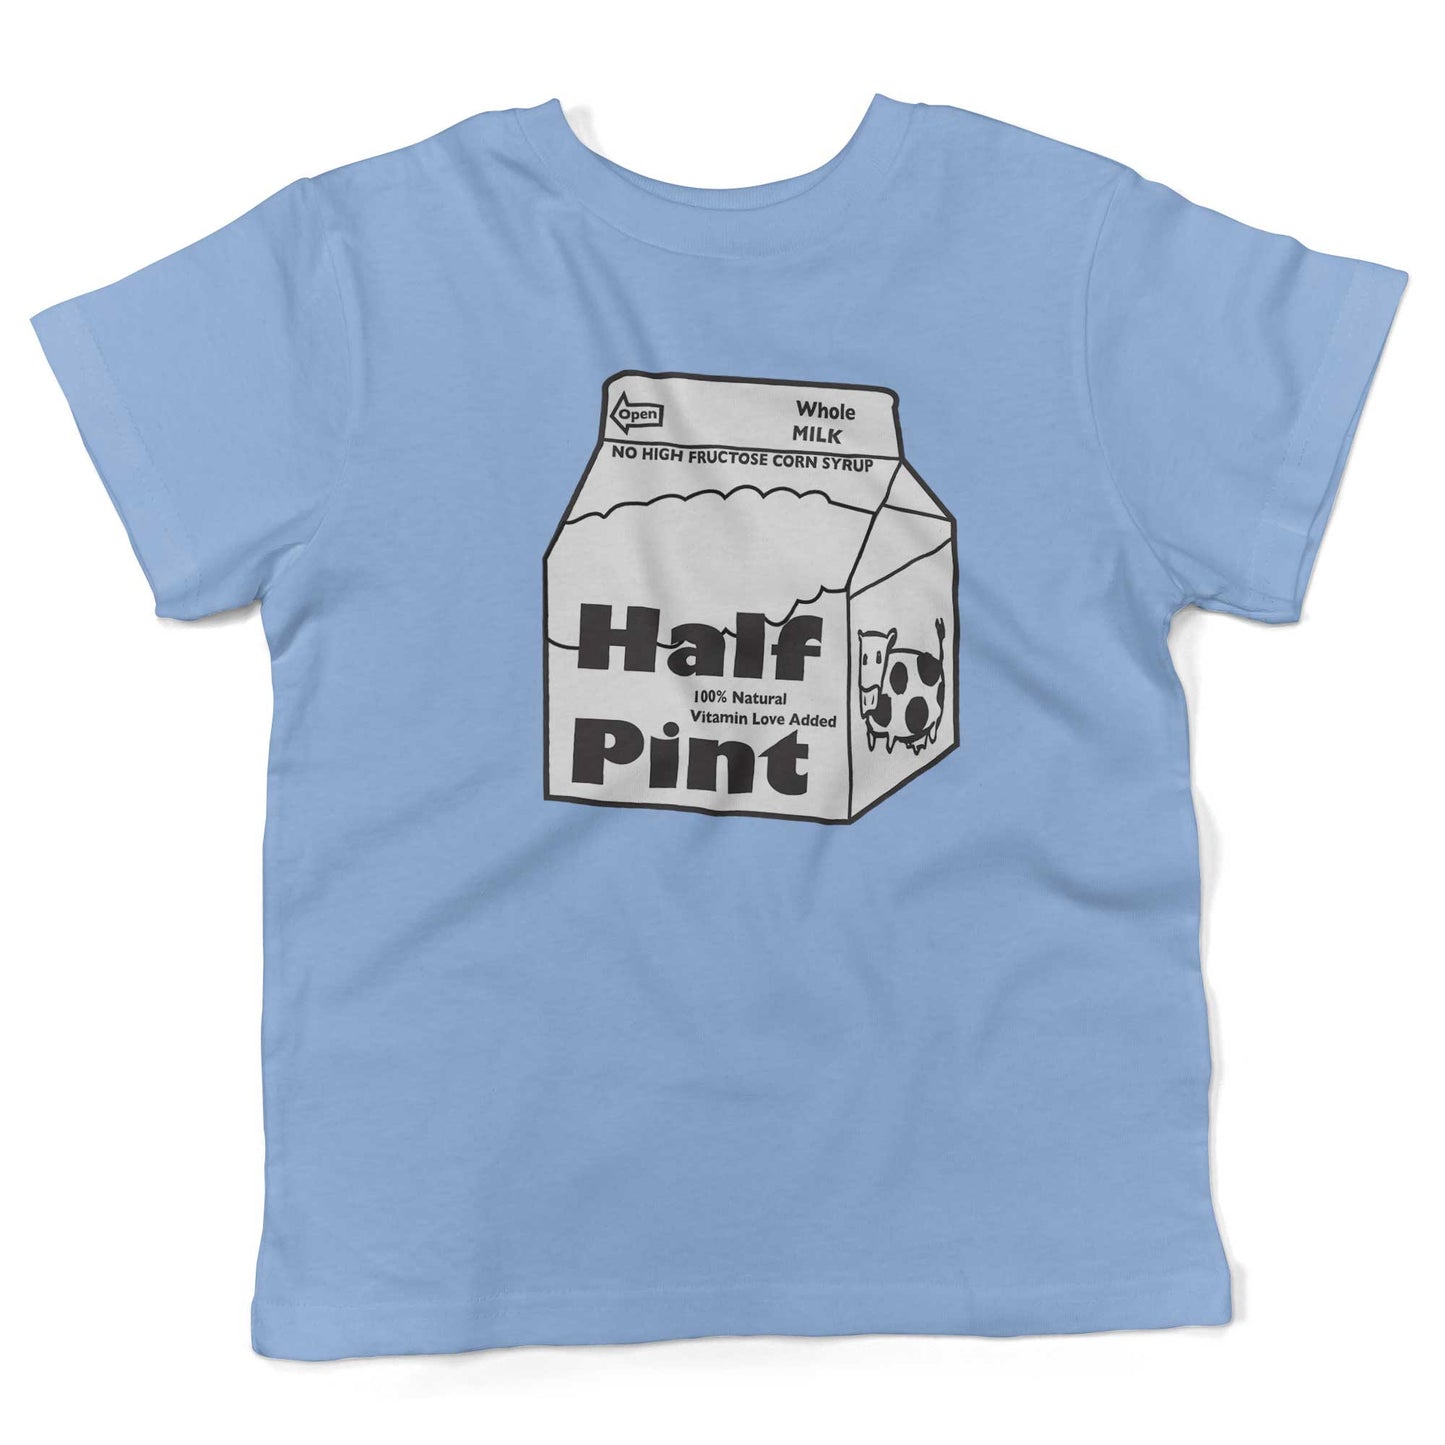 Half Pint Of Milk Toddler Shirt-Organic Baby Blue-2T